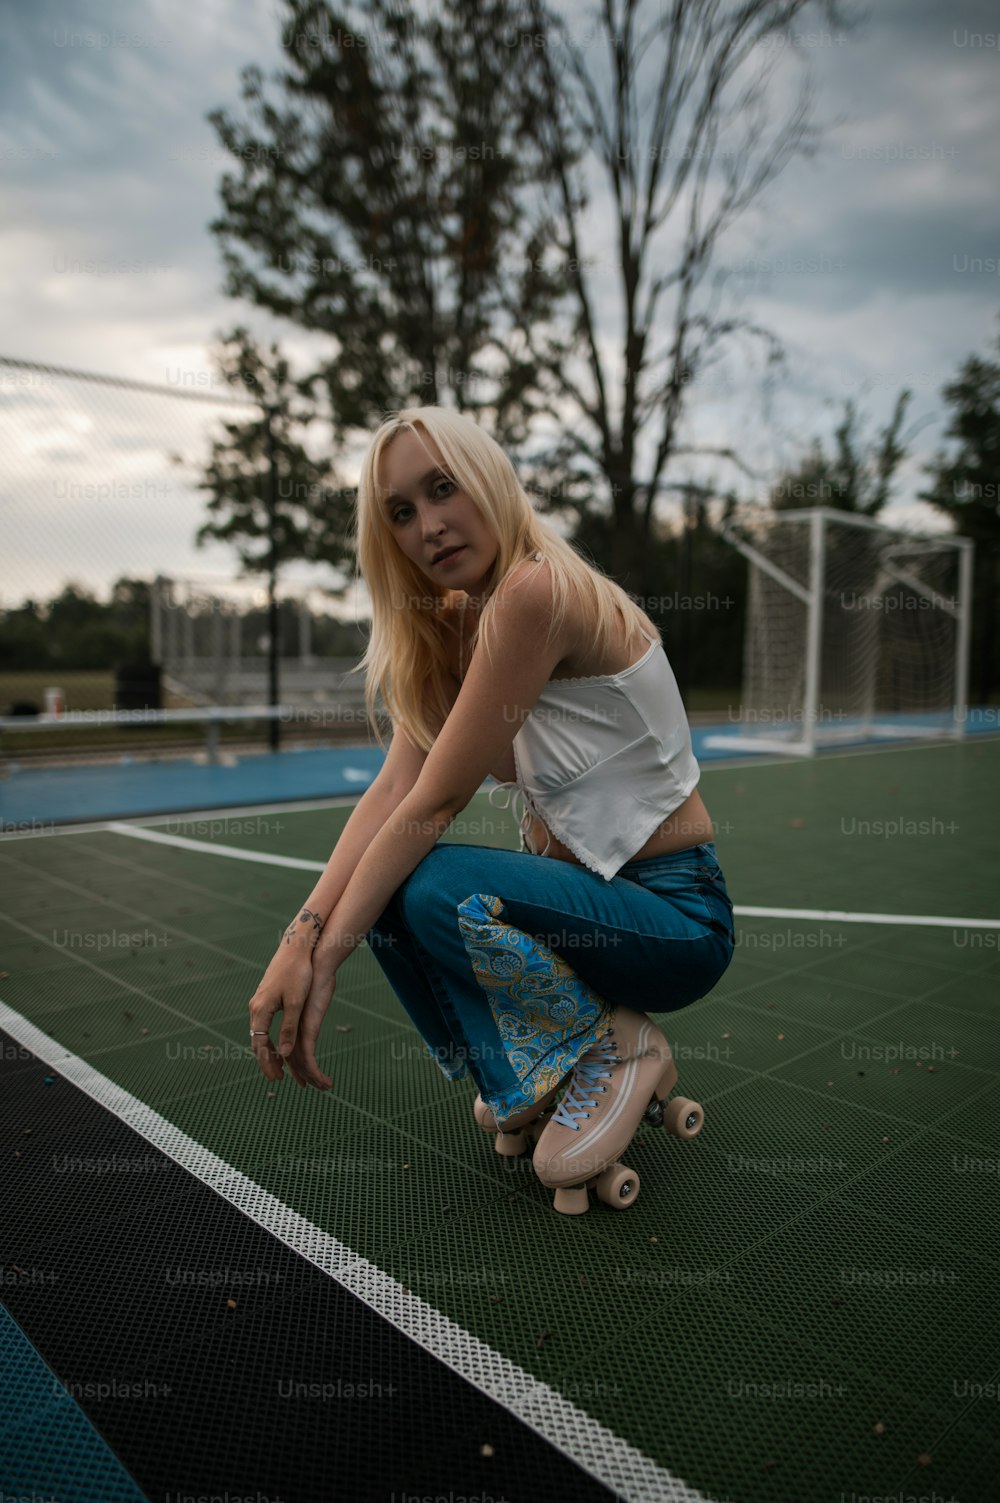 a woman kneeling on a tennis court holding a skateboard